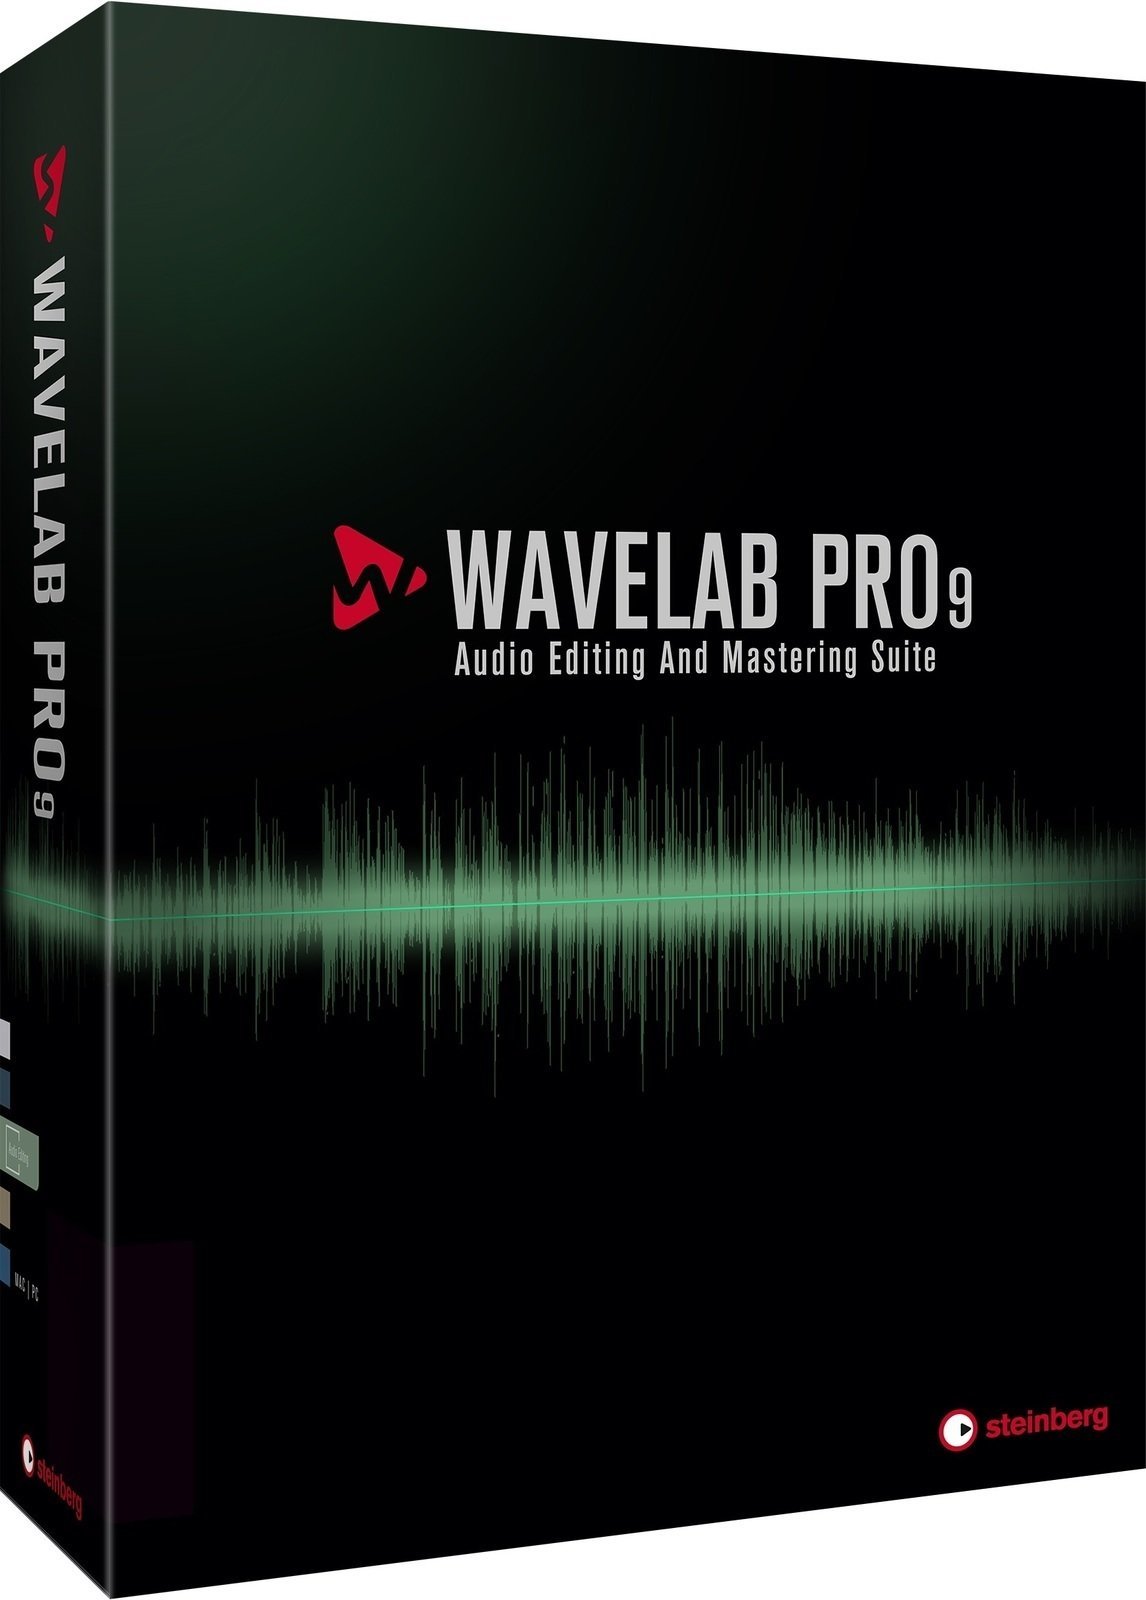 Mastering software Steinberg WaveLab Pro 9 Educational Edition